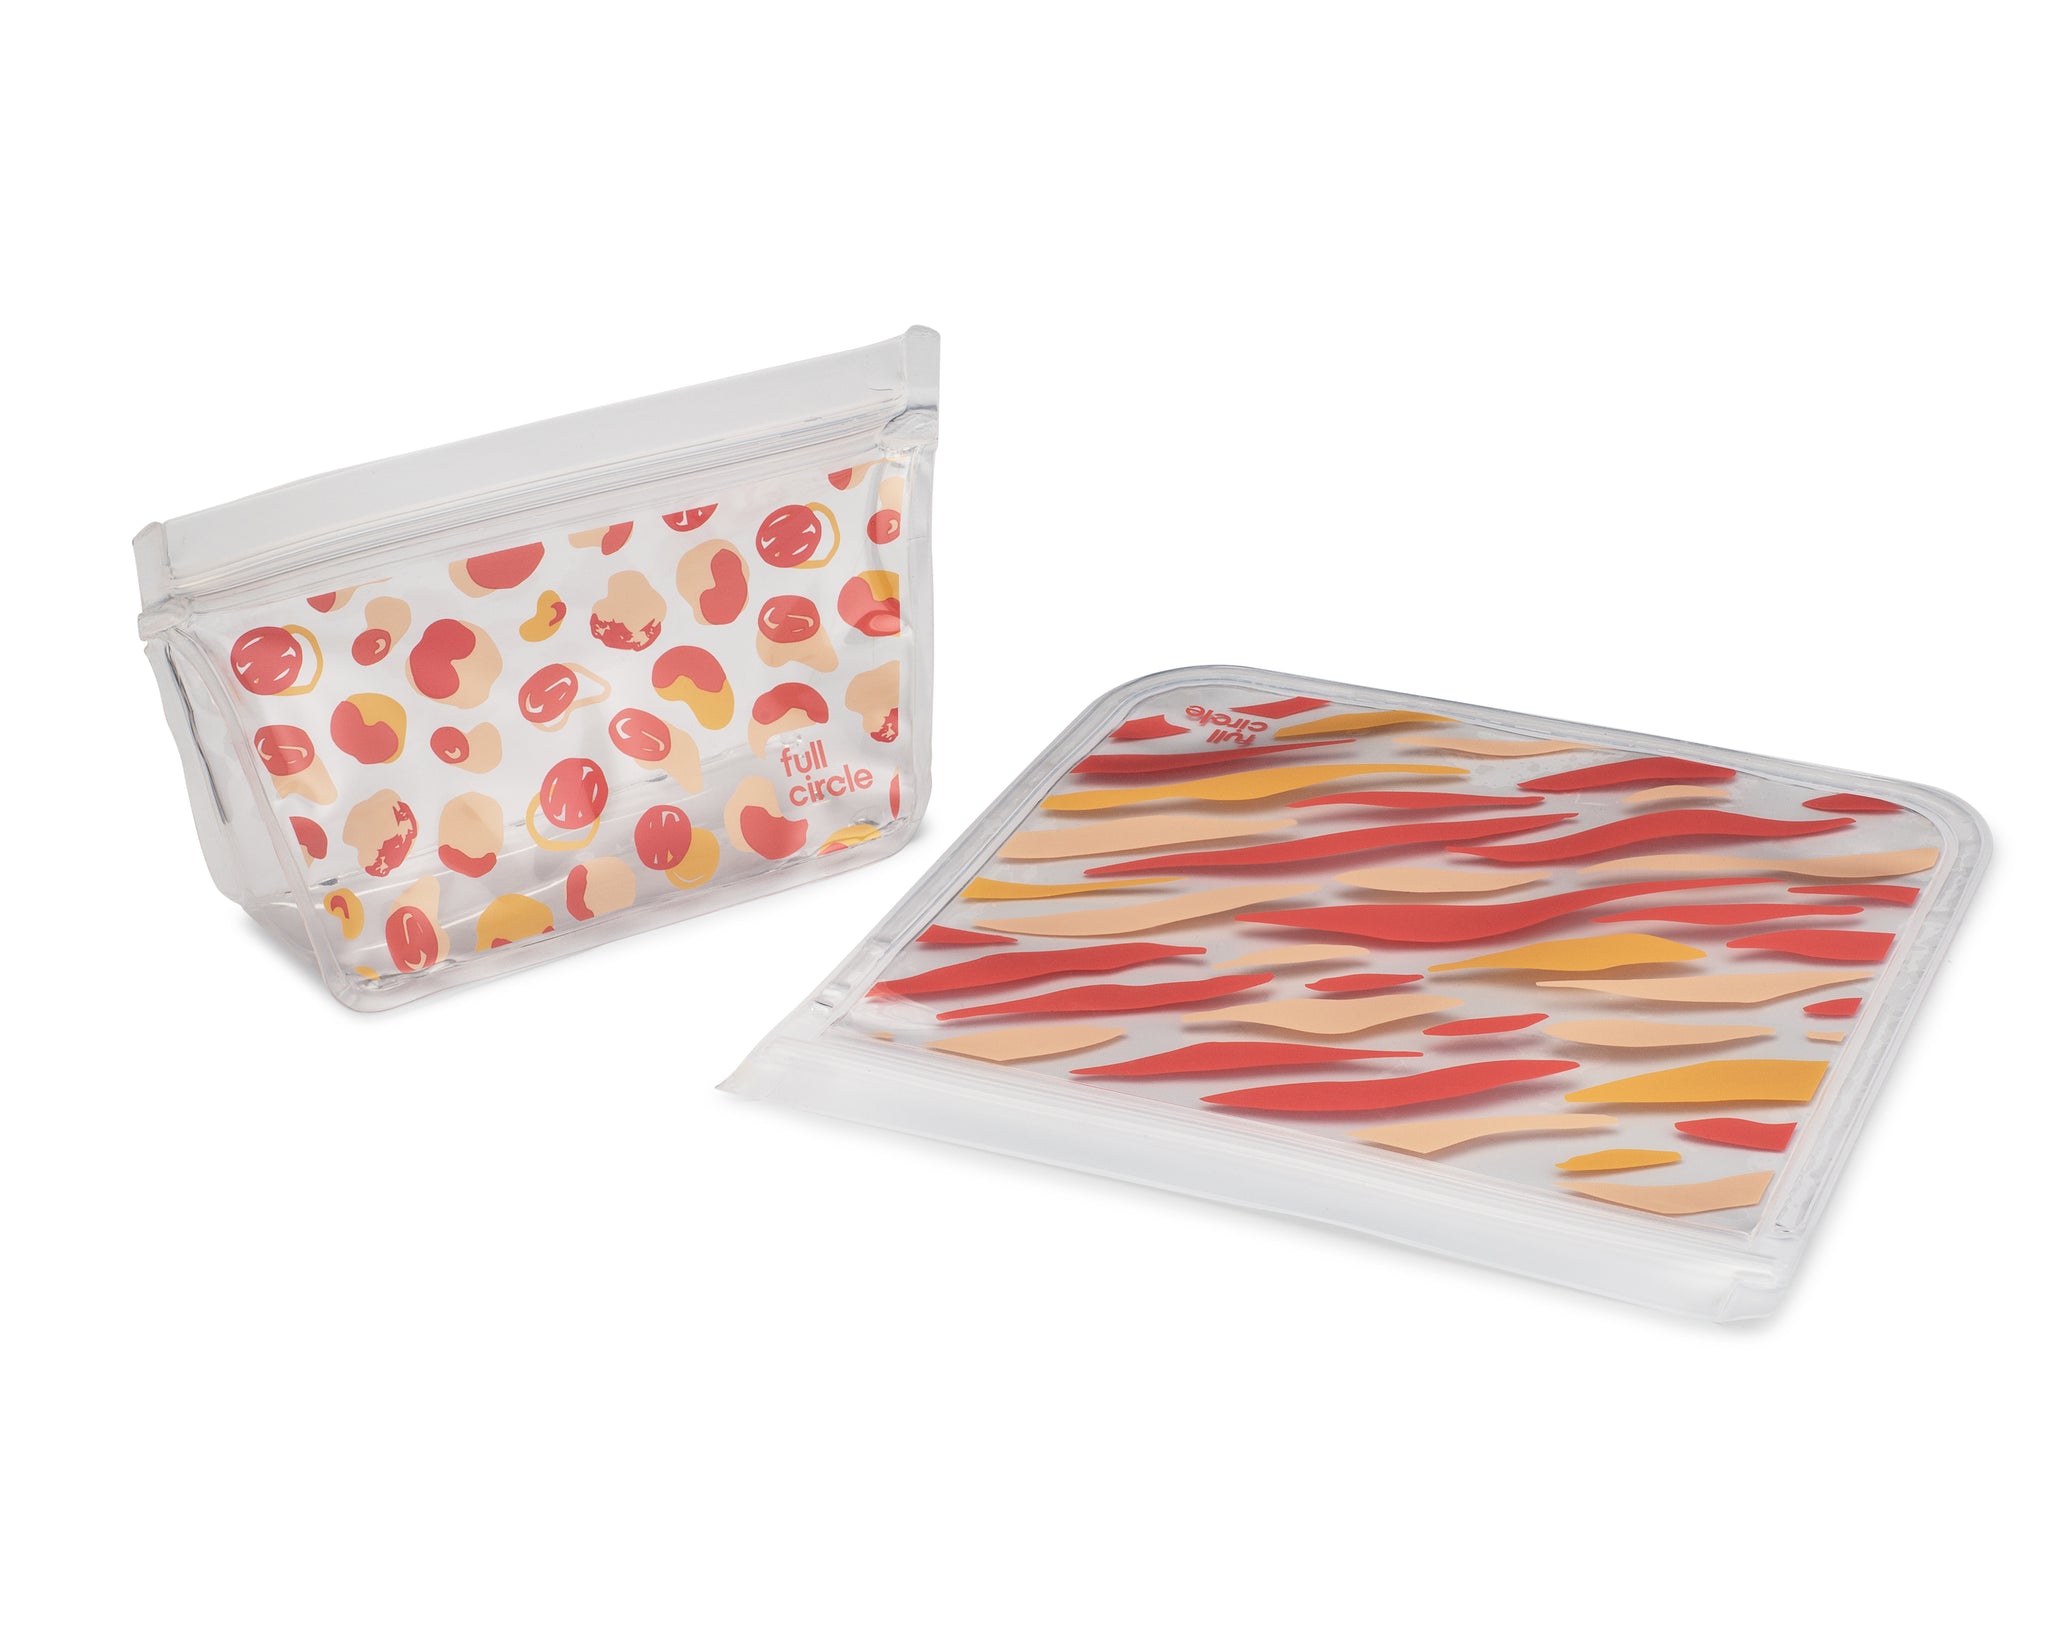 Full Circle ZIPTUCK KIDS Reusable Lunch Bag Set – Full Circle Home